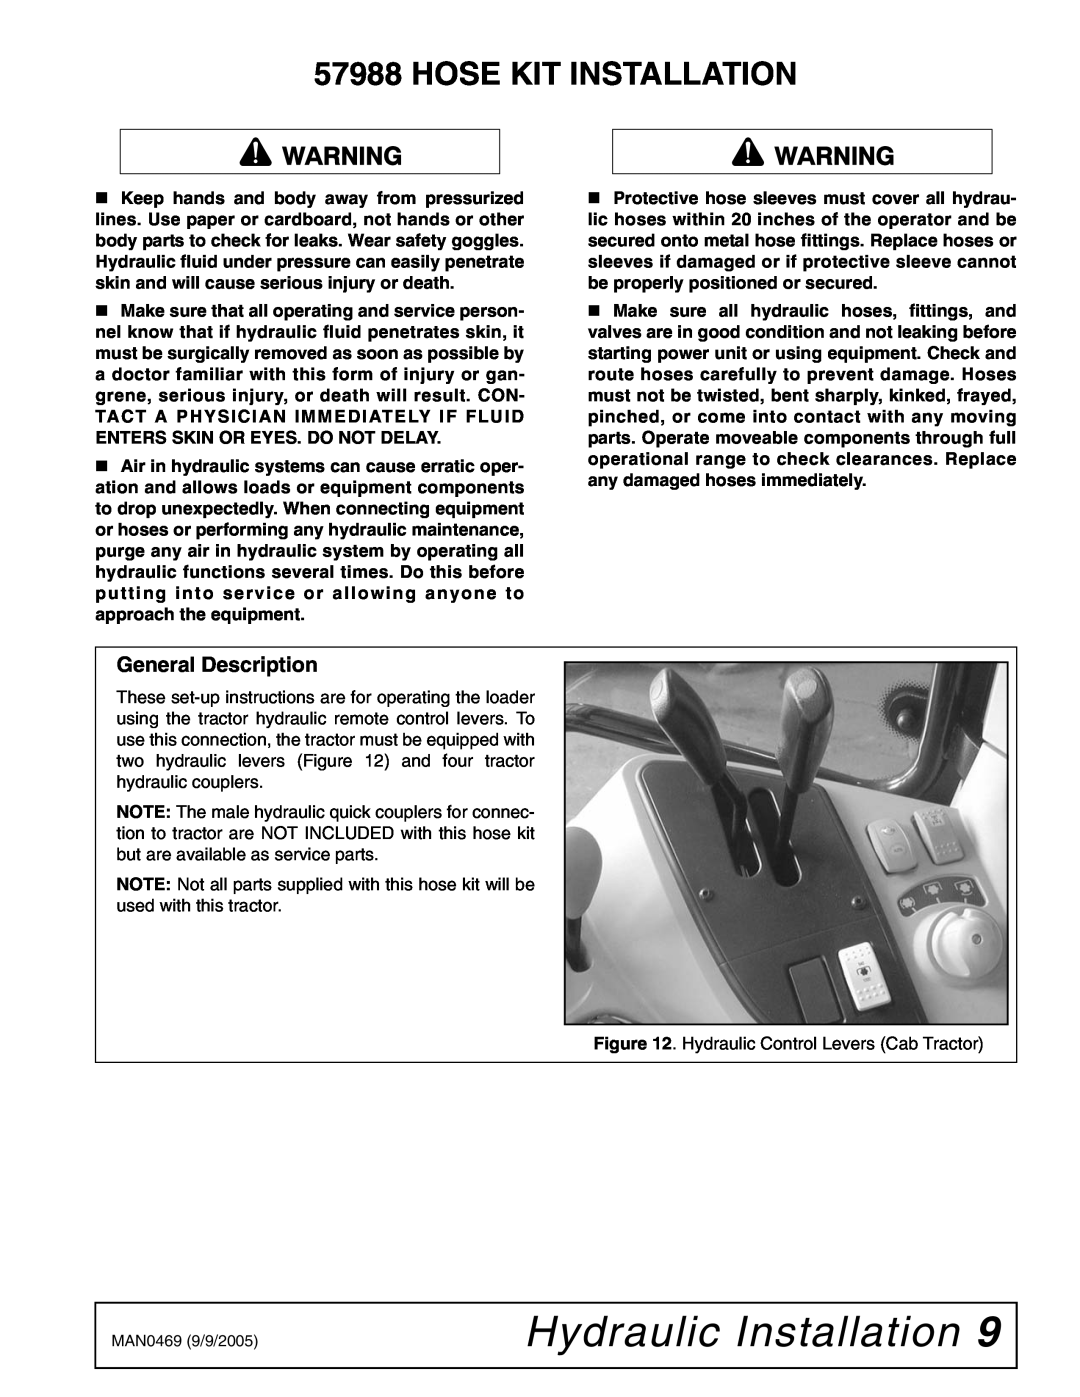 Woods Equipment 211822 installation manual Hydraulic Installation, General Description 